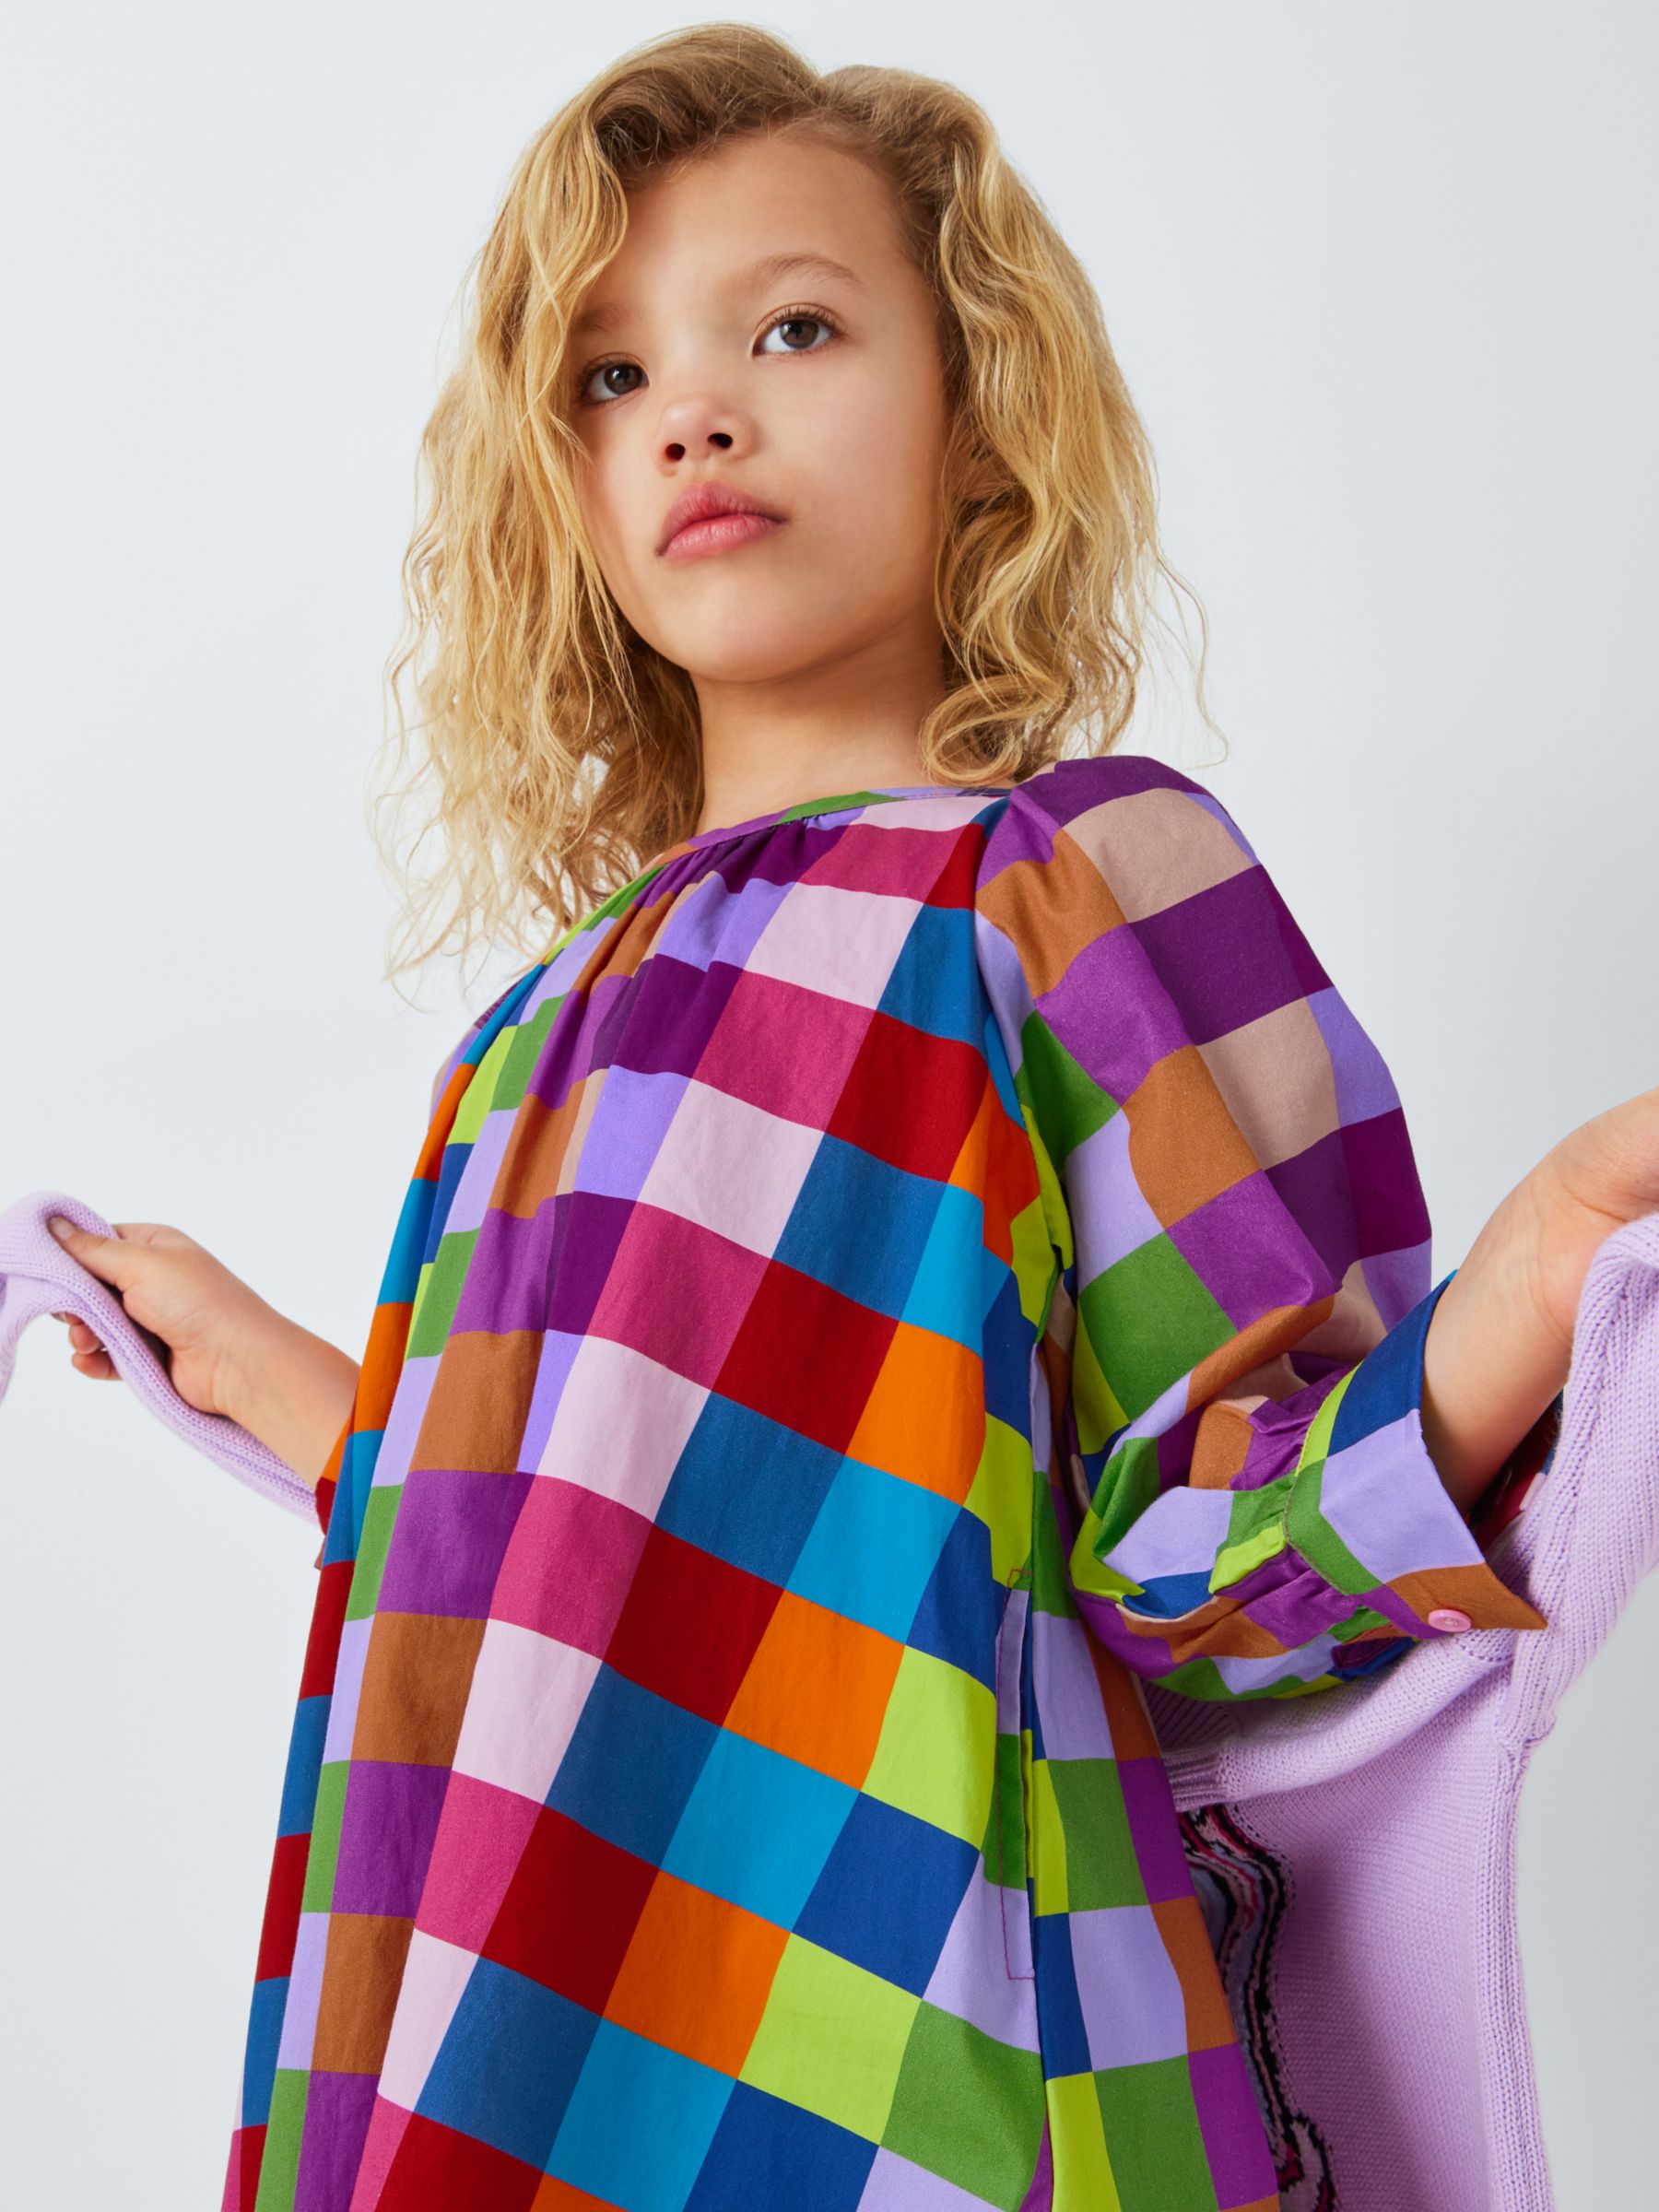 Olivia Rubin Kids' Polly Rainbow Check Dress, Multi, 4-5 years